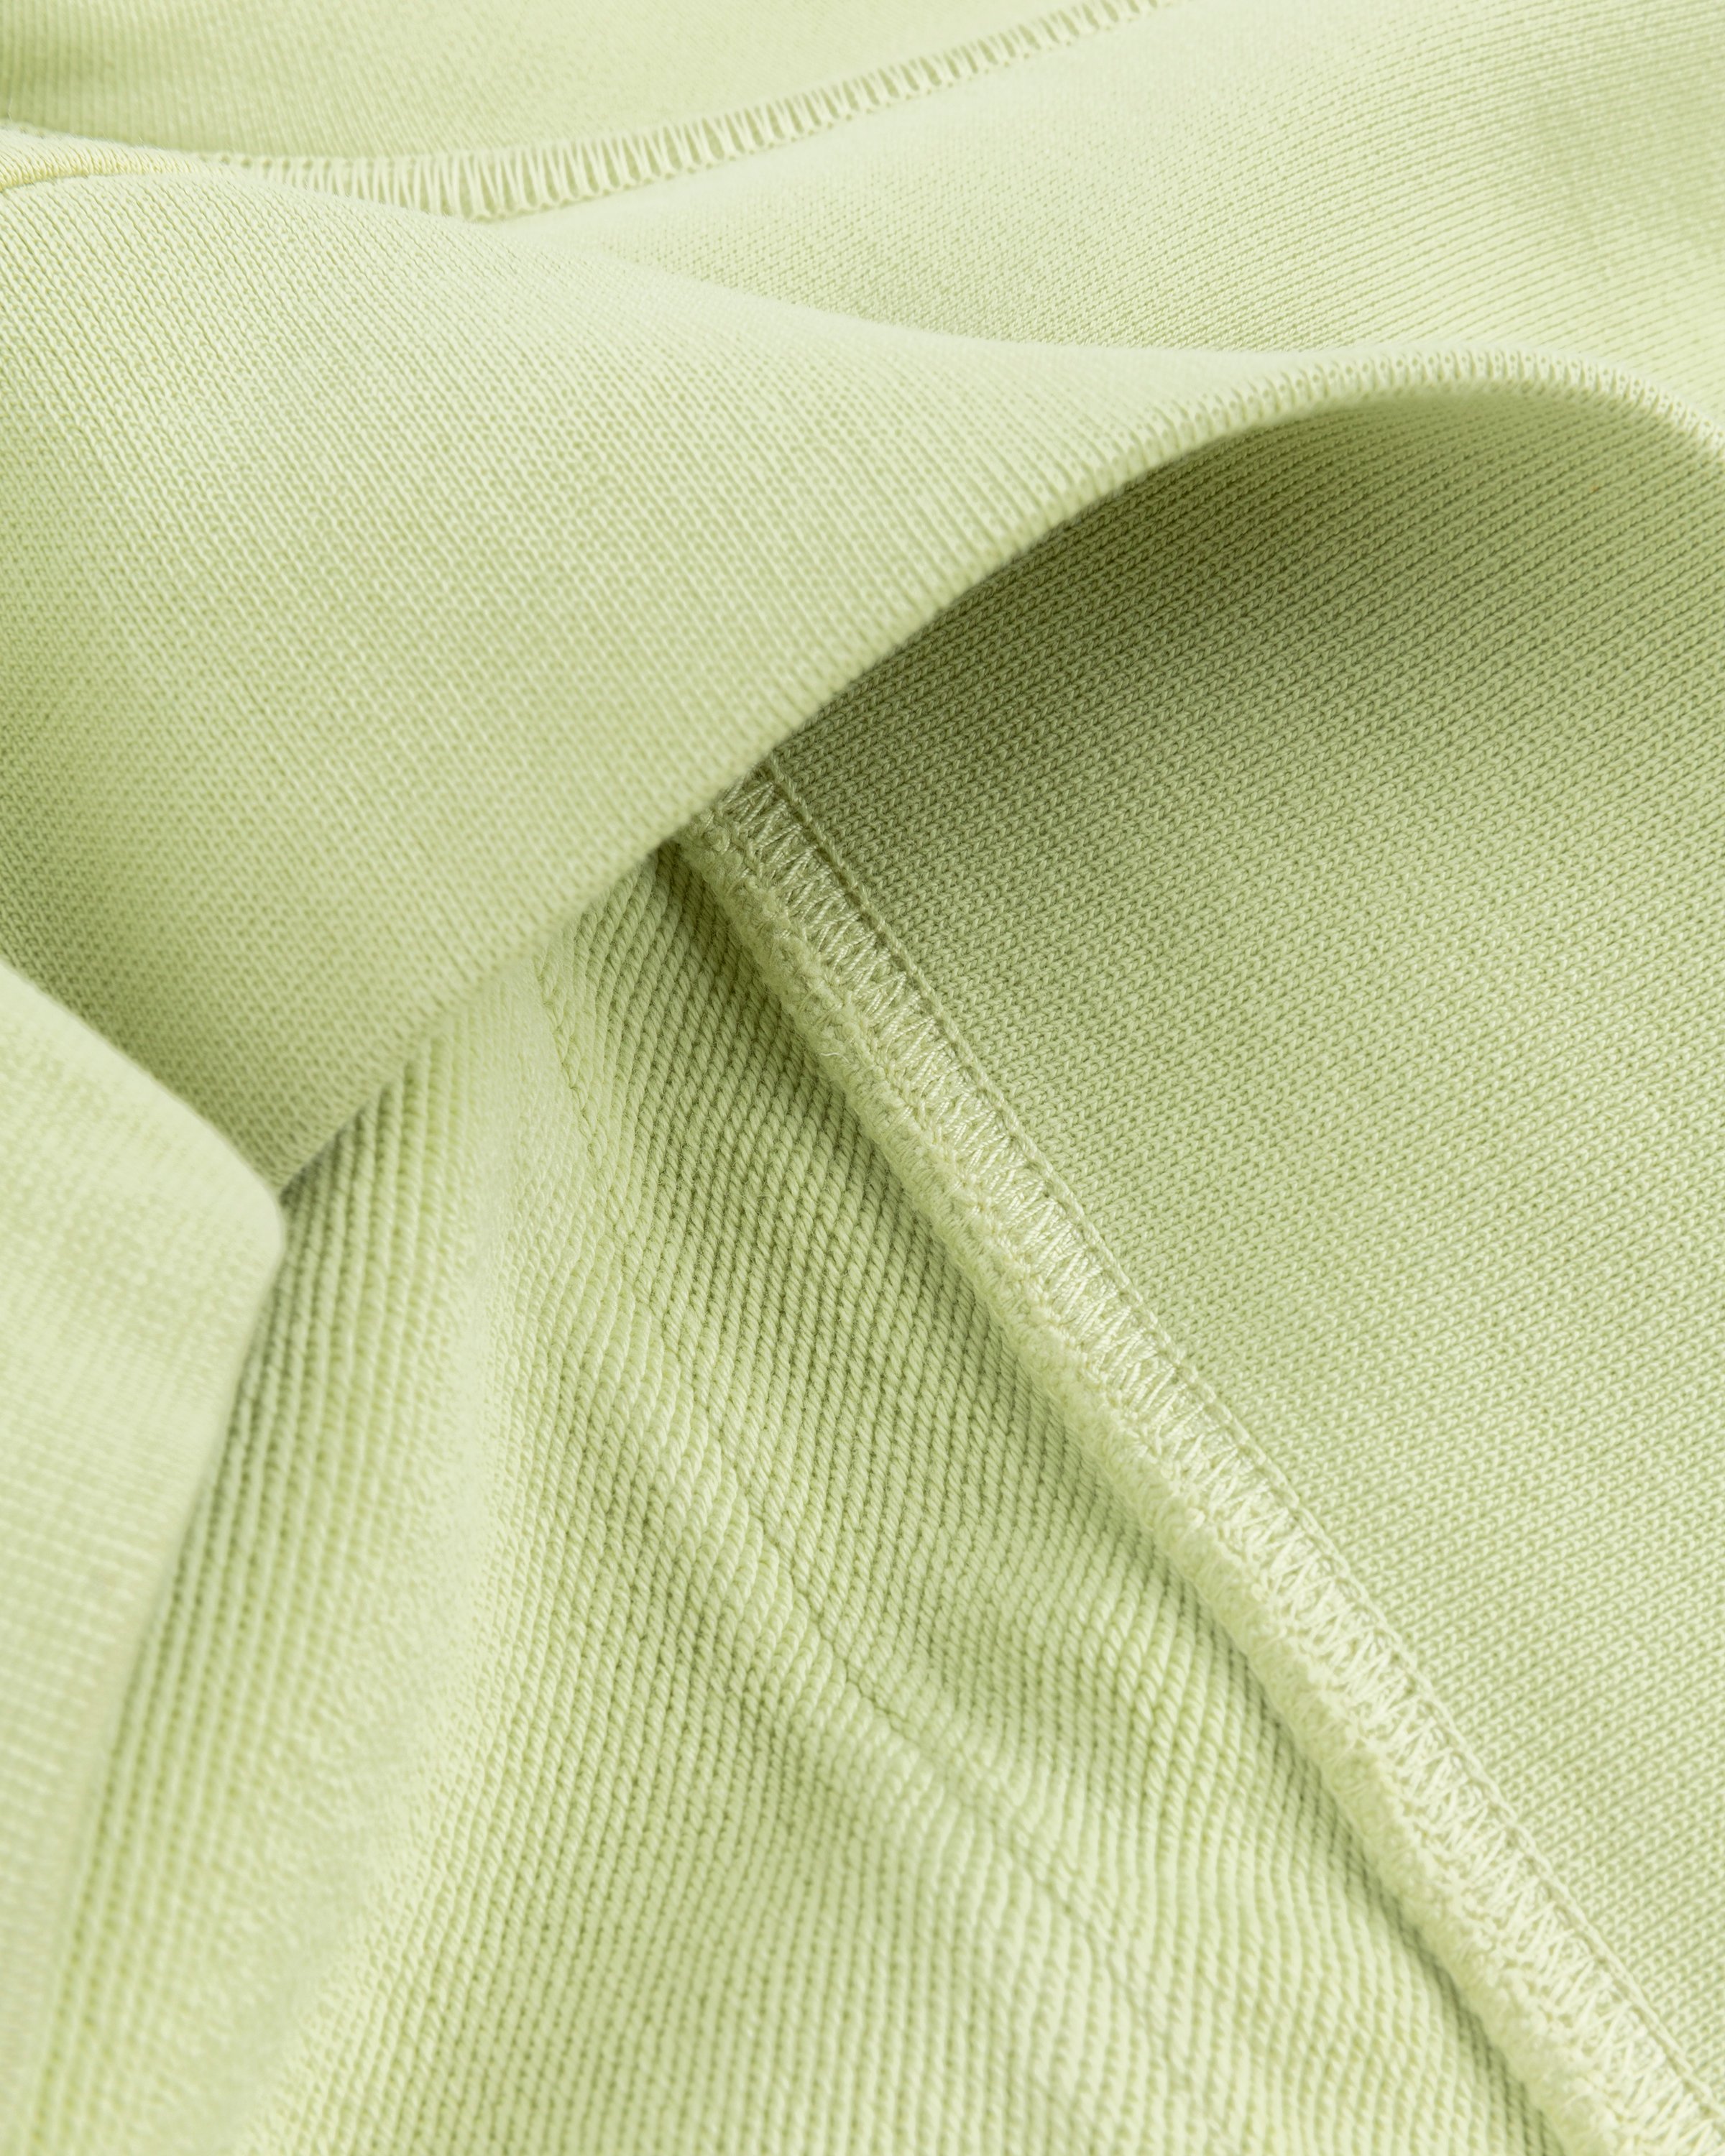 Stone Island - 64151 Garment-Dyed Cotton Fleece Hoodie Light Green - Clothing - Green - Image 4